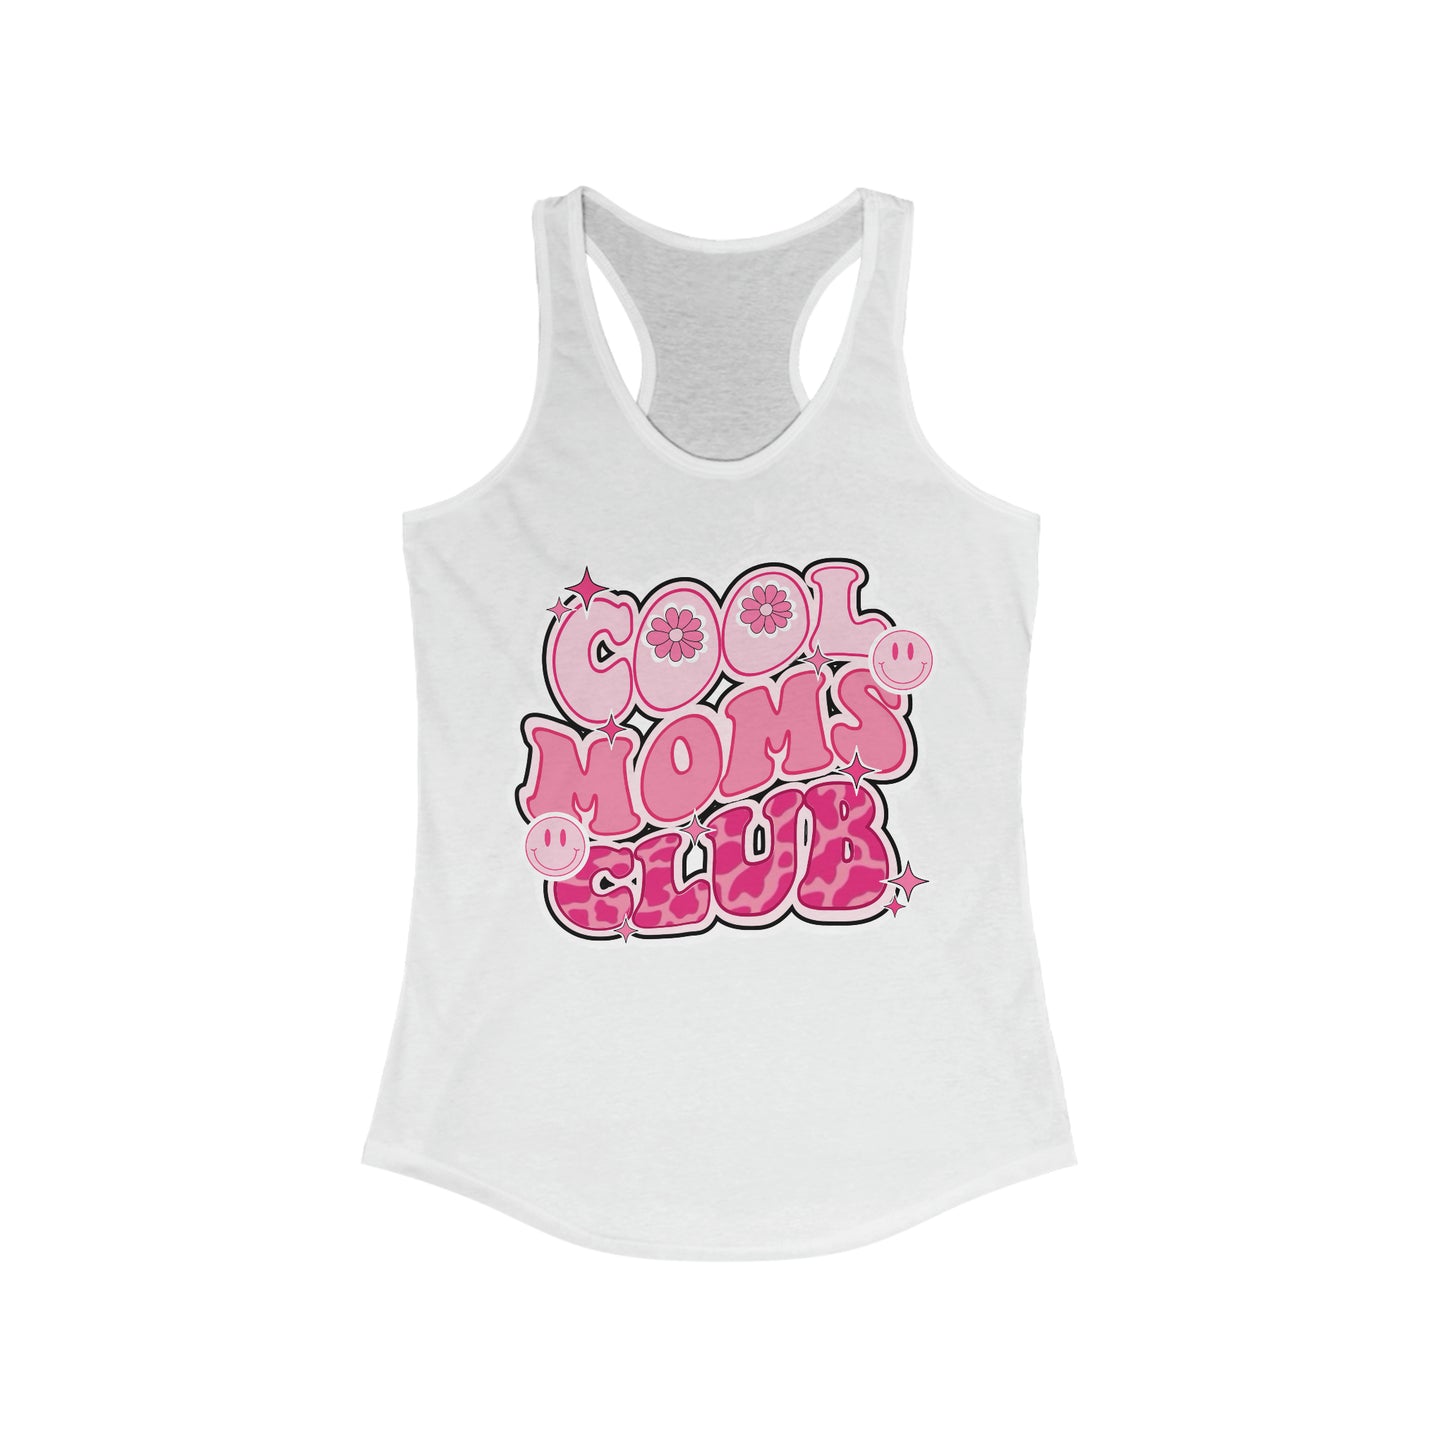 Cool Moms Club Pink - Women's Ideal Racerback Tank